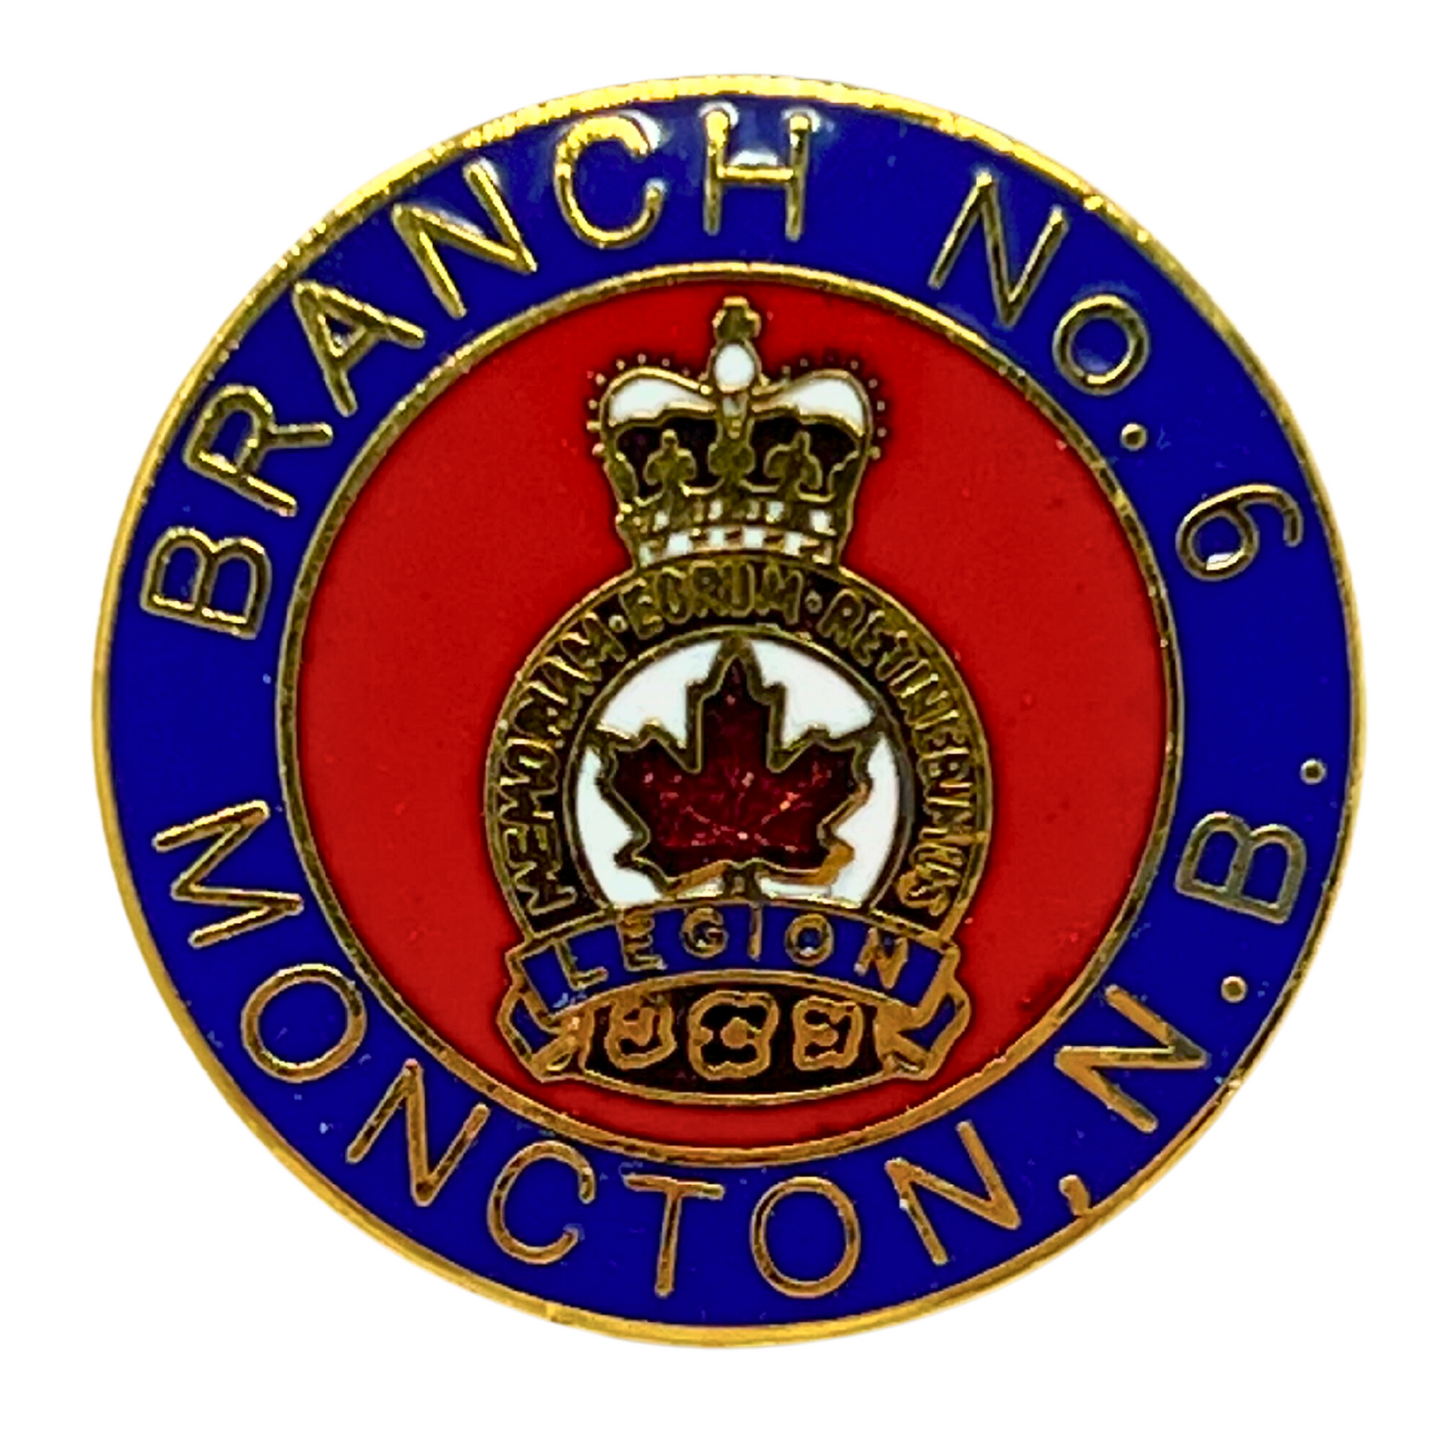 Legion Branch No. 6 Moncton, N.B. Clubs & Organizations Lapel Pin P2